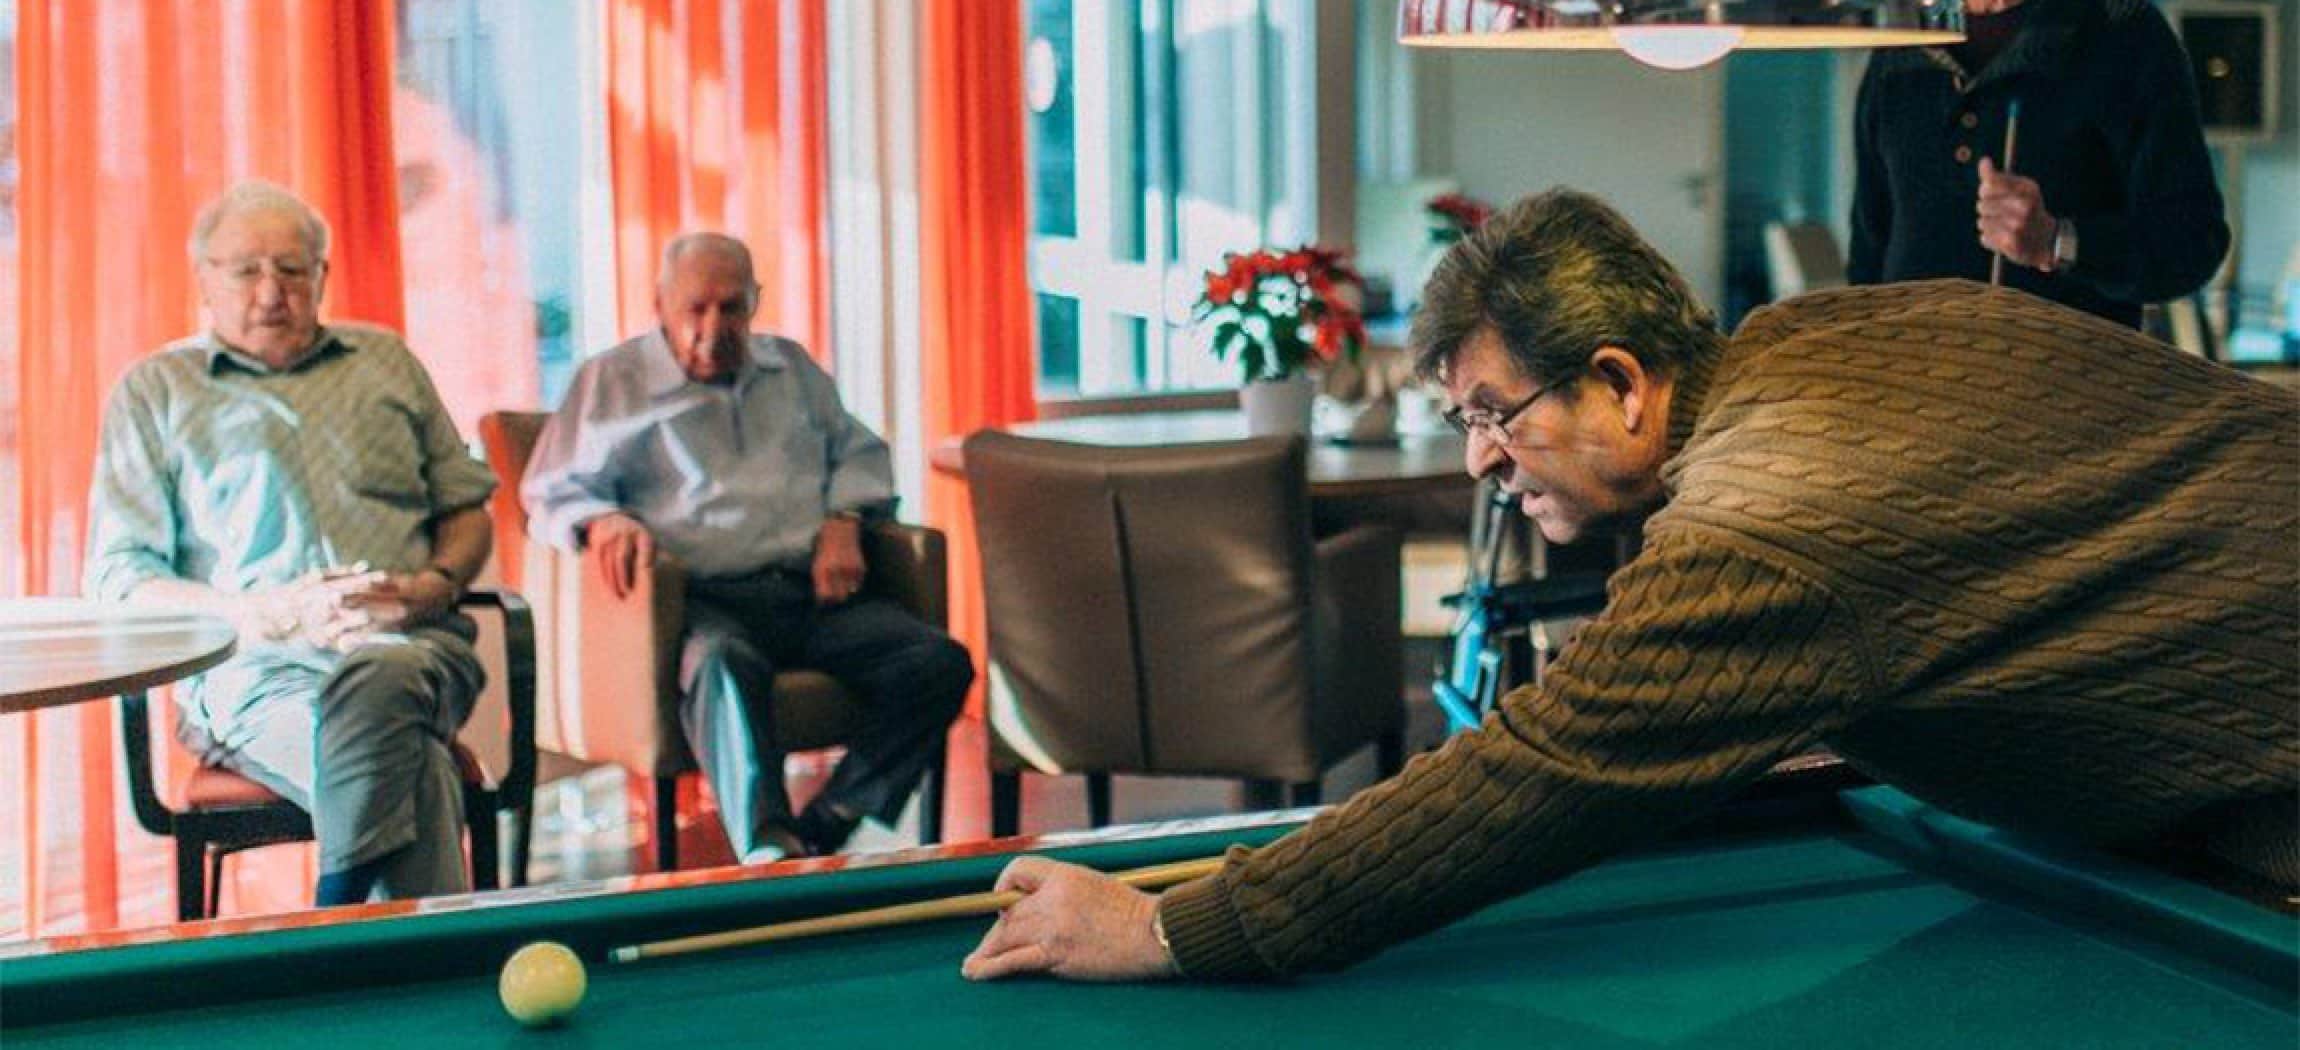 Biljarttafel en oudere mannen die naar biljartspel kijken